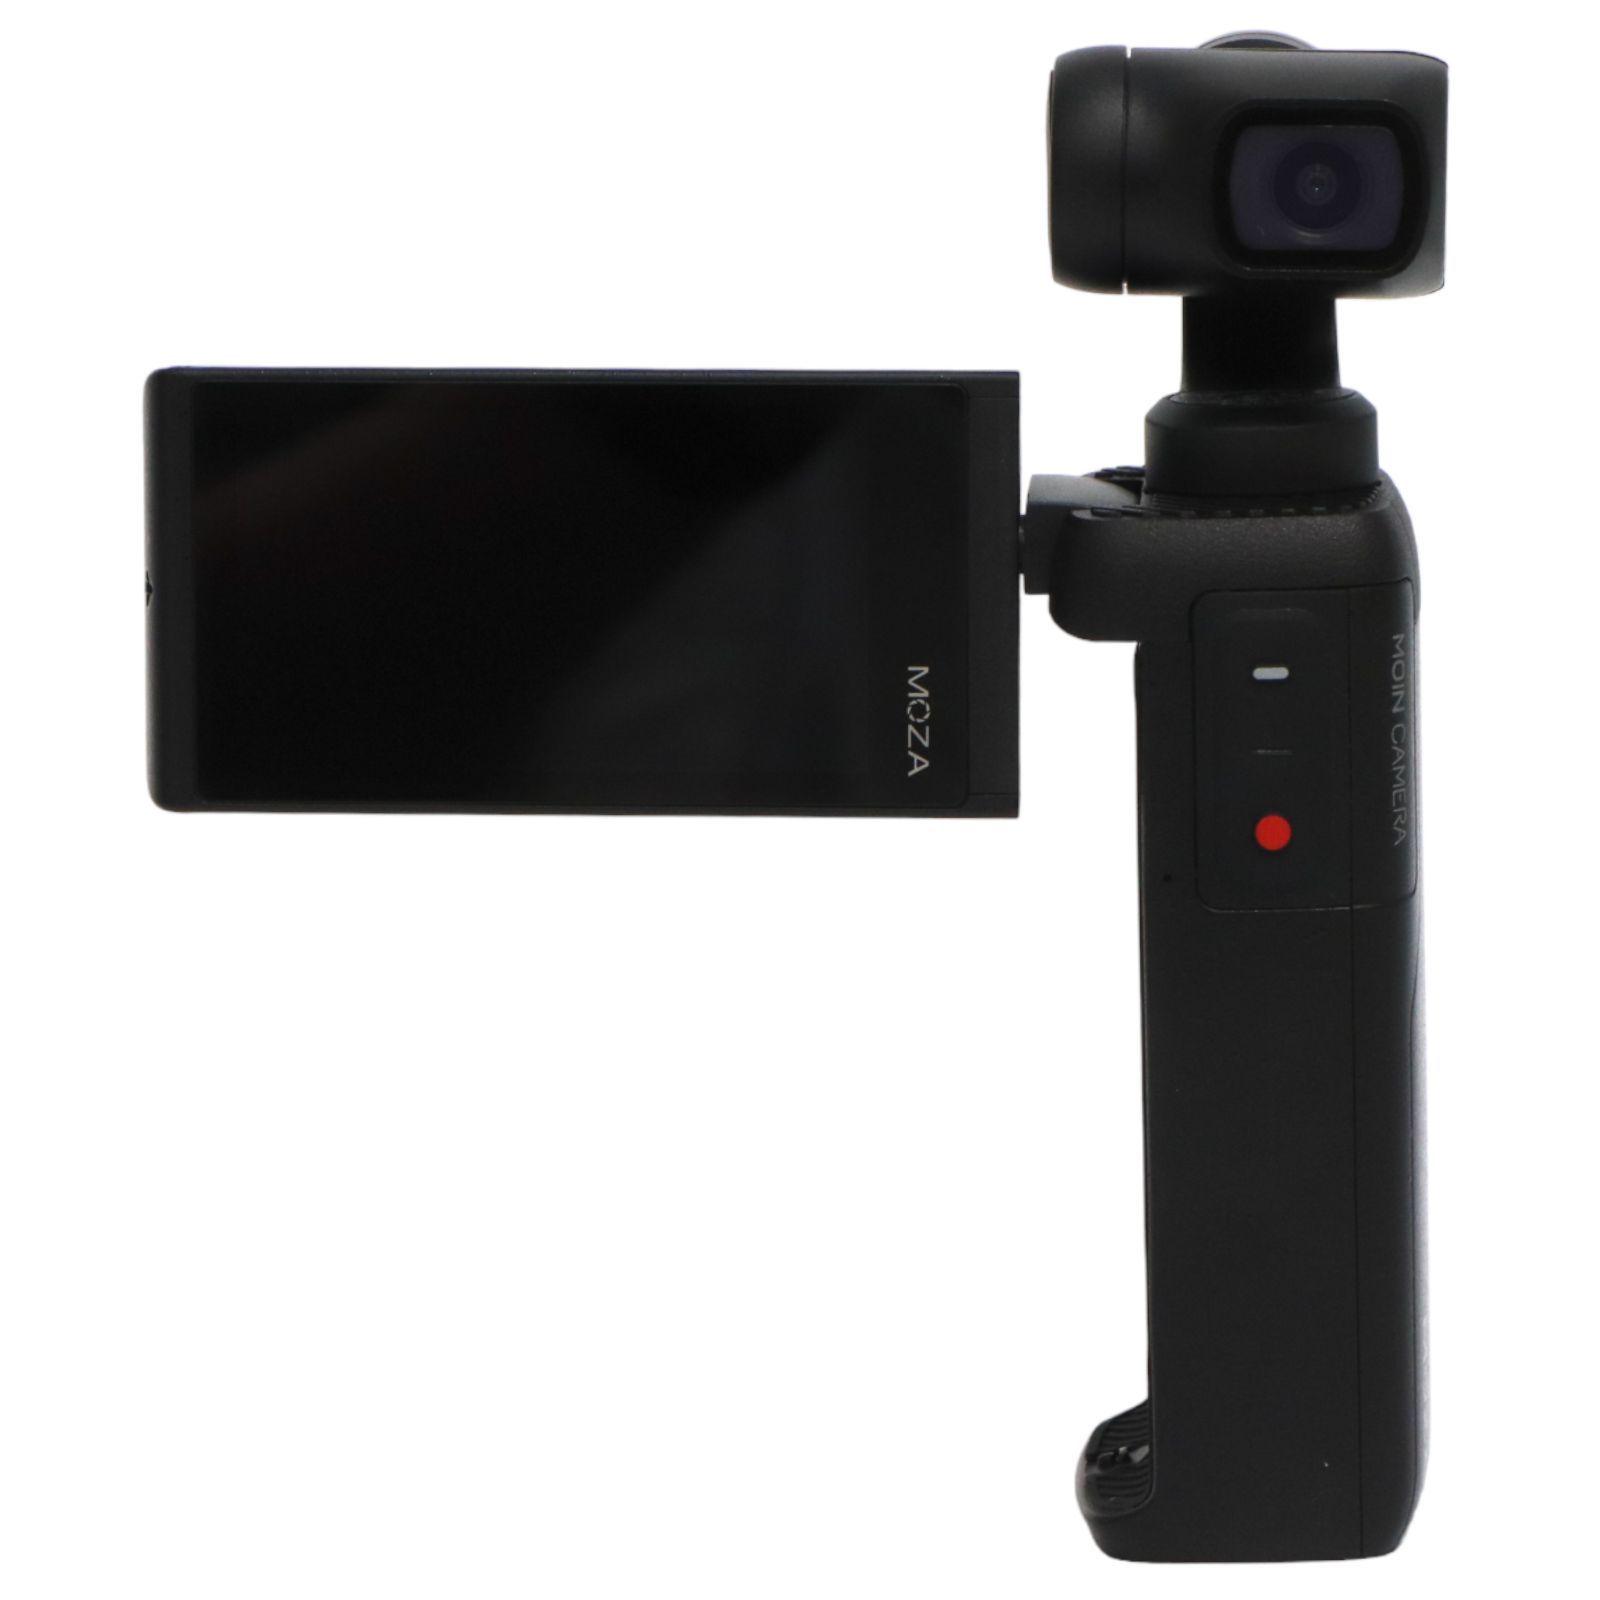 MOZA ジンバルカメラ MOIN Camera 120°超広角レンズ 4K モザ カメラ